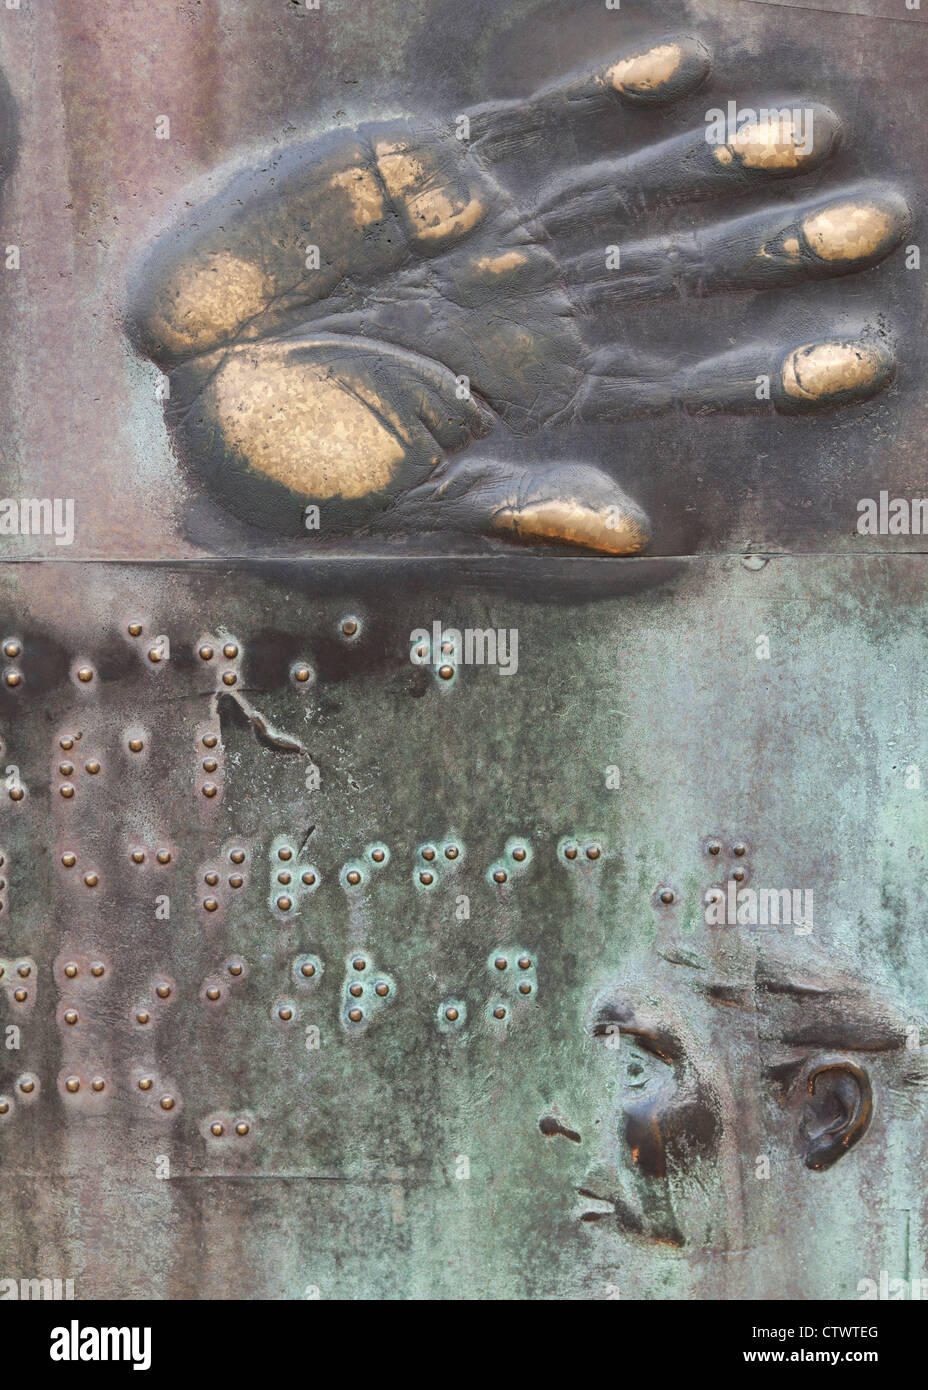 Braille relief sculpture Stock Photo